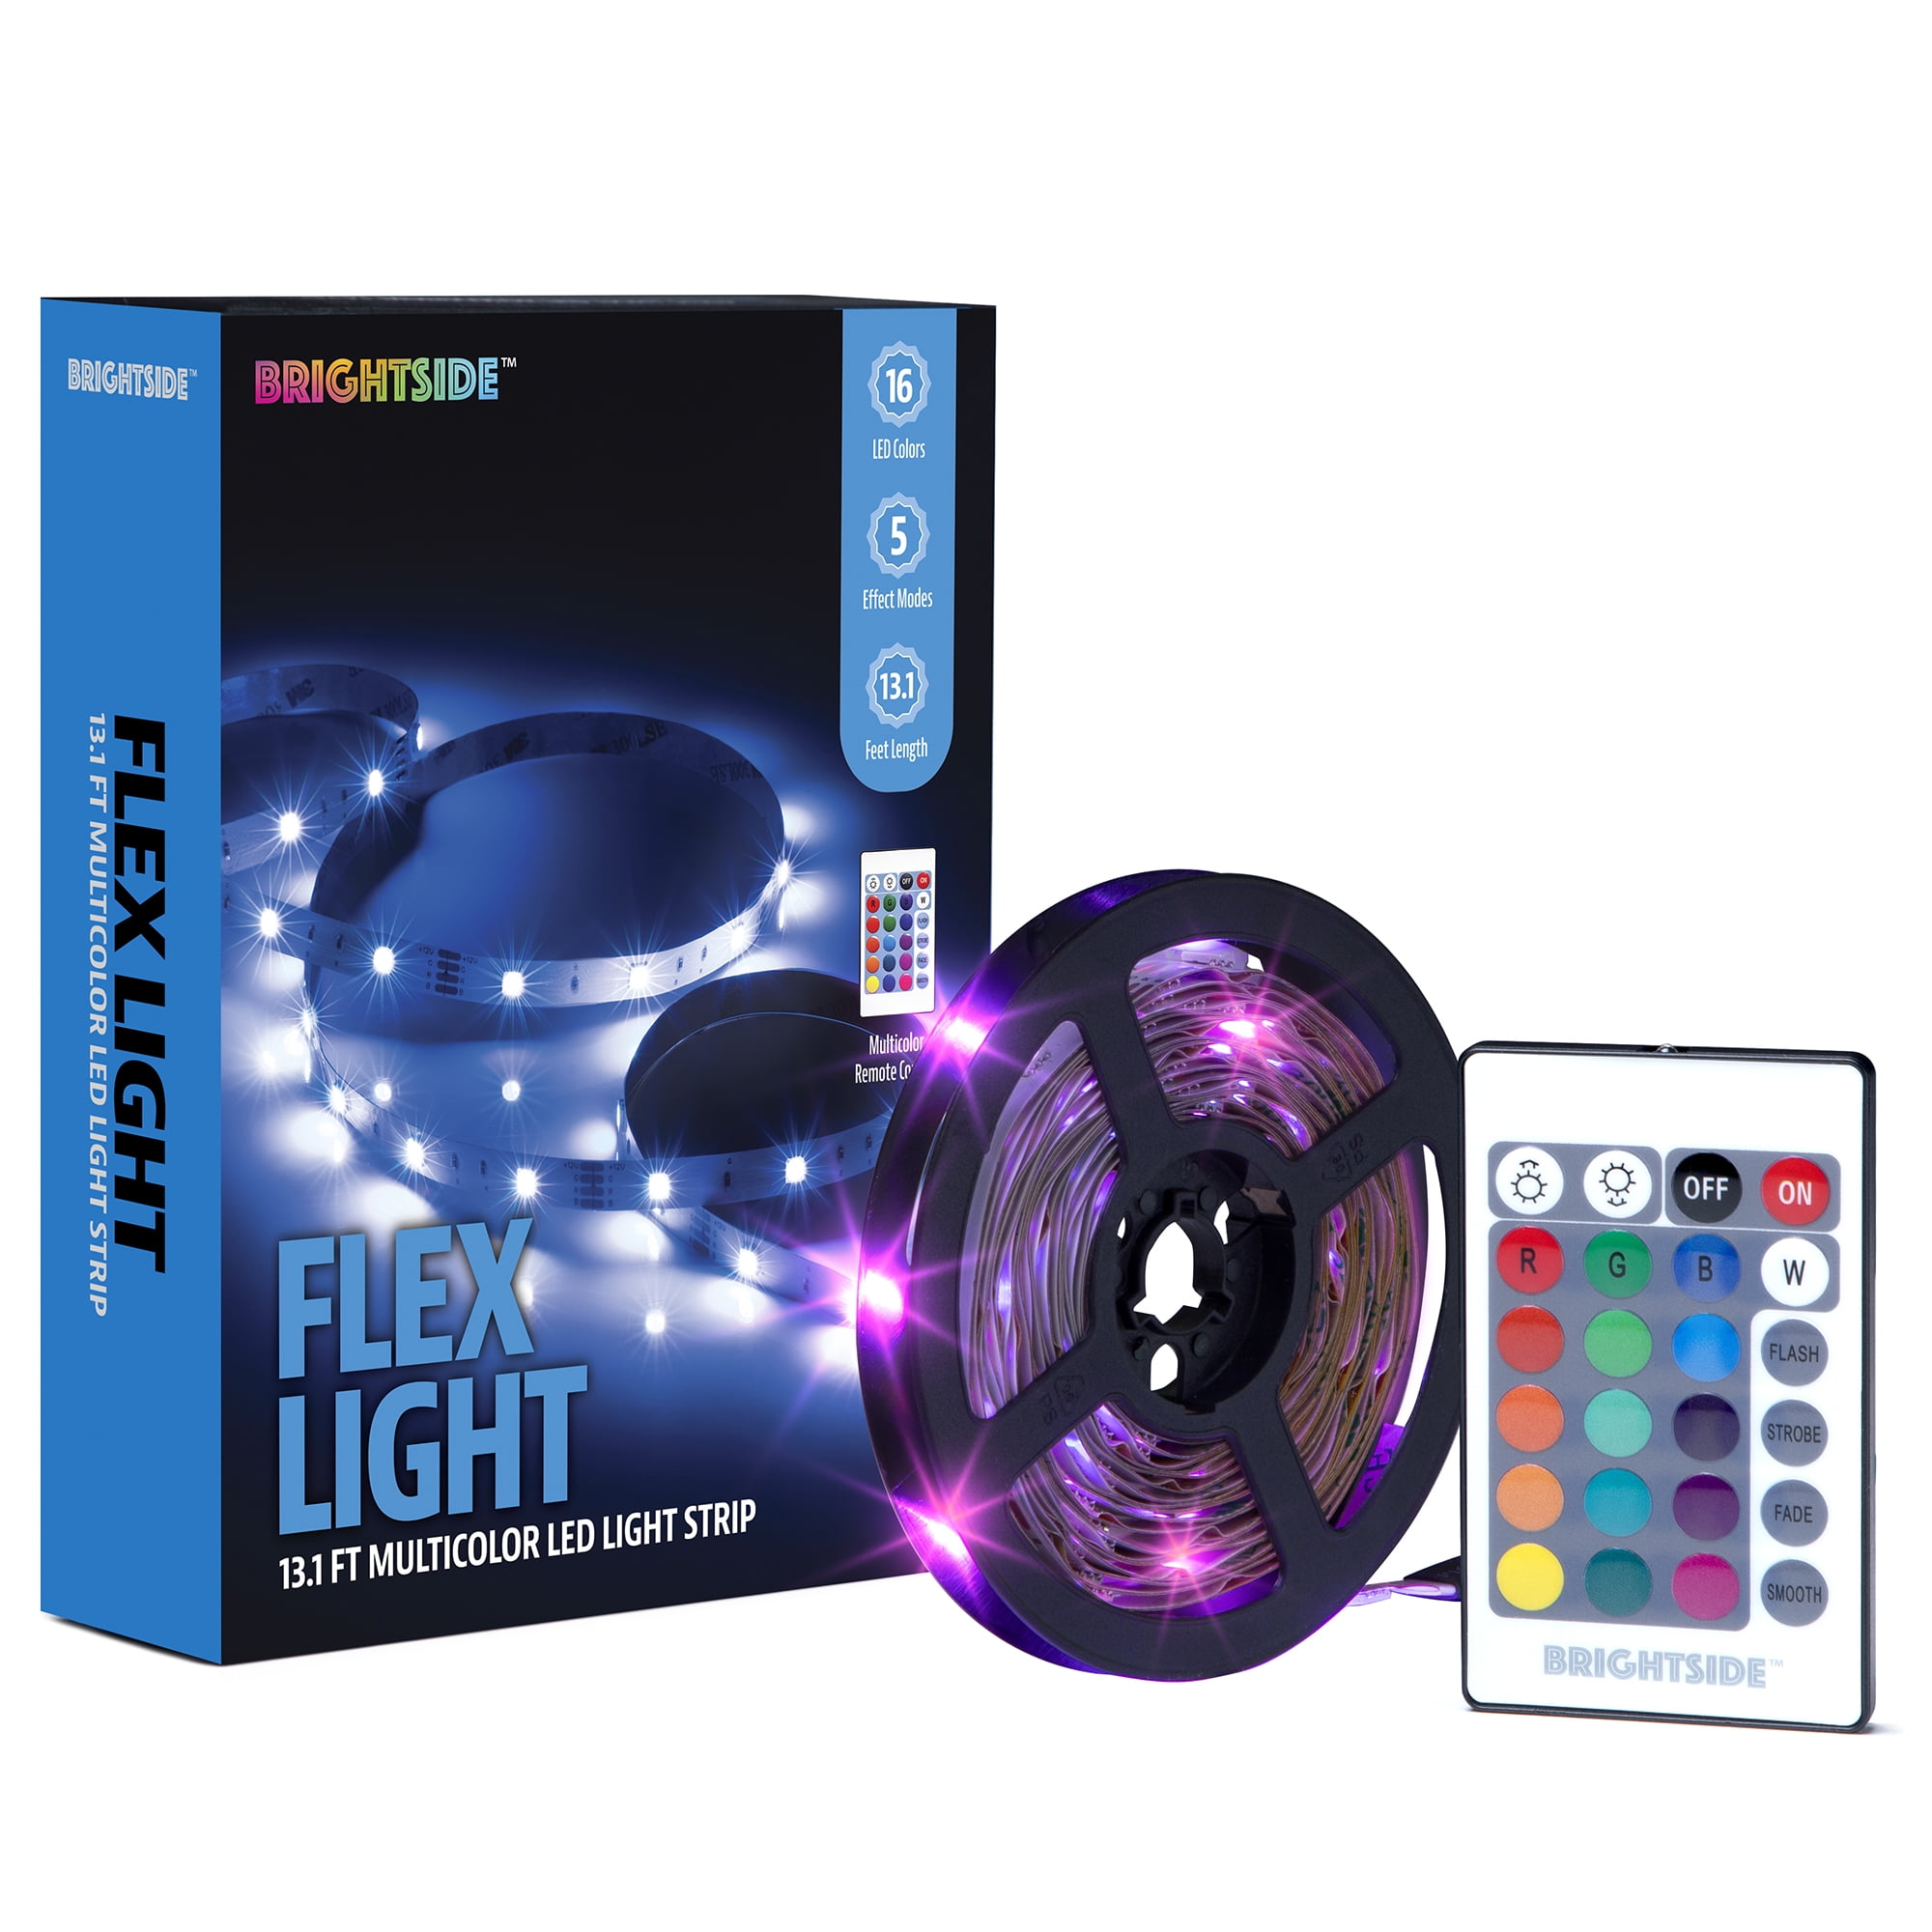 Brightside™ Flex Light ft. LED Strip, USB-Powered, Remote Indoor - Walmart.com